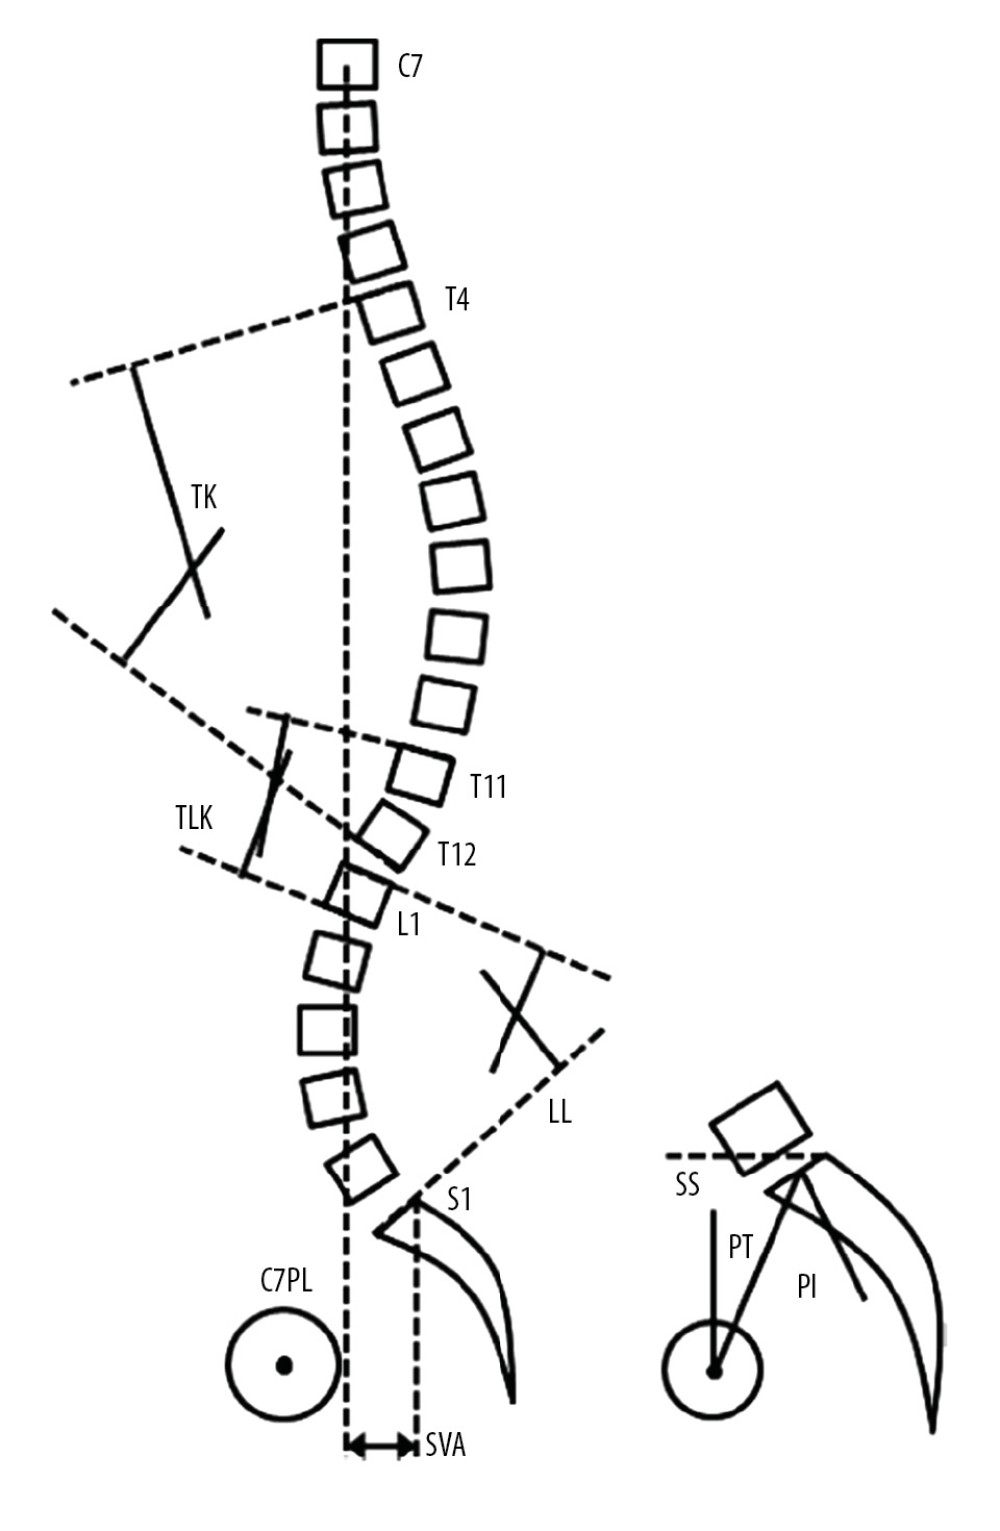 Schematic diagram of the spino-pelvic parameters measurements. TK – thoracic kyphosis; TLK – thoracolumbar kyphosis; SVA – sagittal vertical axis; LL – lumbar lordosis; SS – sacral slope; PT – pelvic tilt; PI – pelvic incidence; C7PL – C7 plumb line.